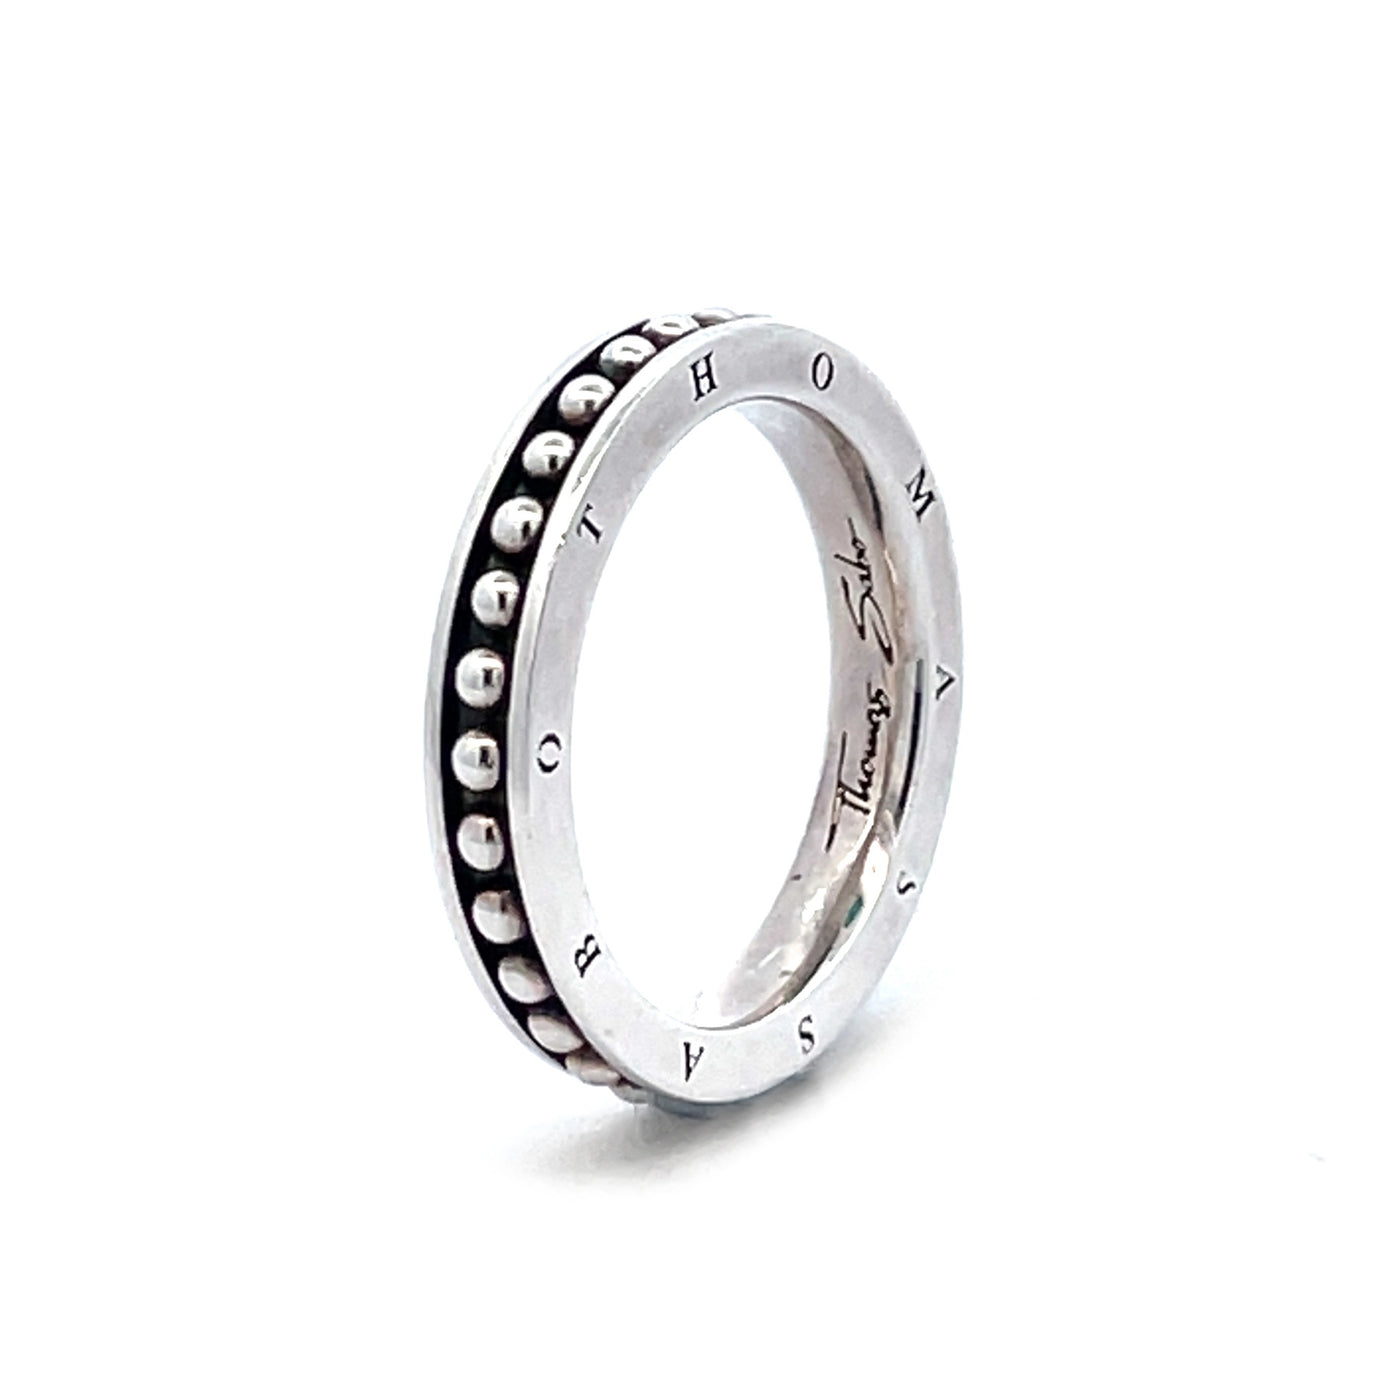 Thomas Sabo Oxidised Silver Ring Size L